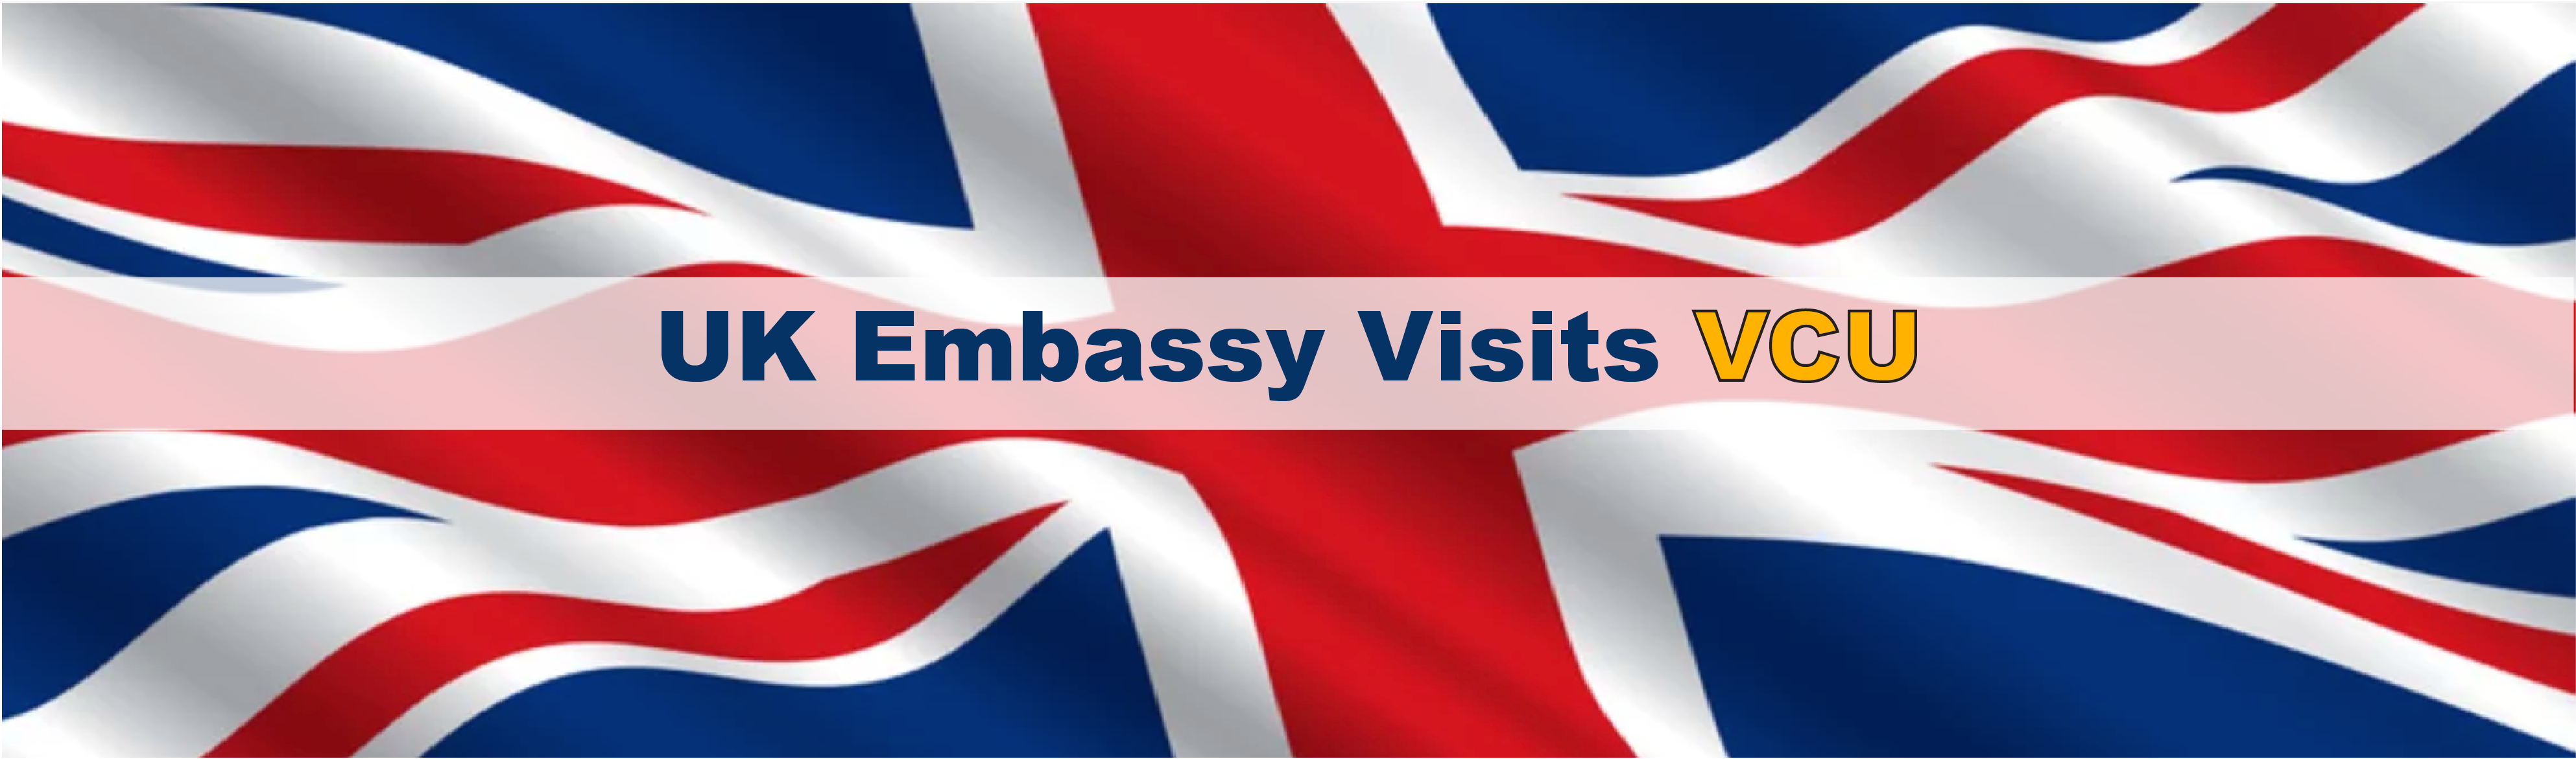 UK Embassy visit